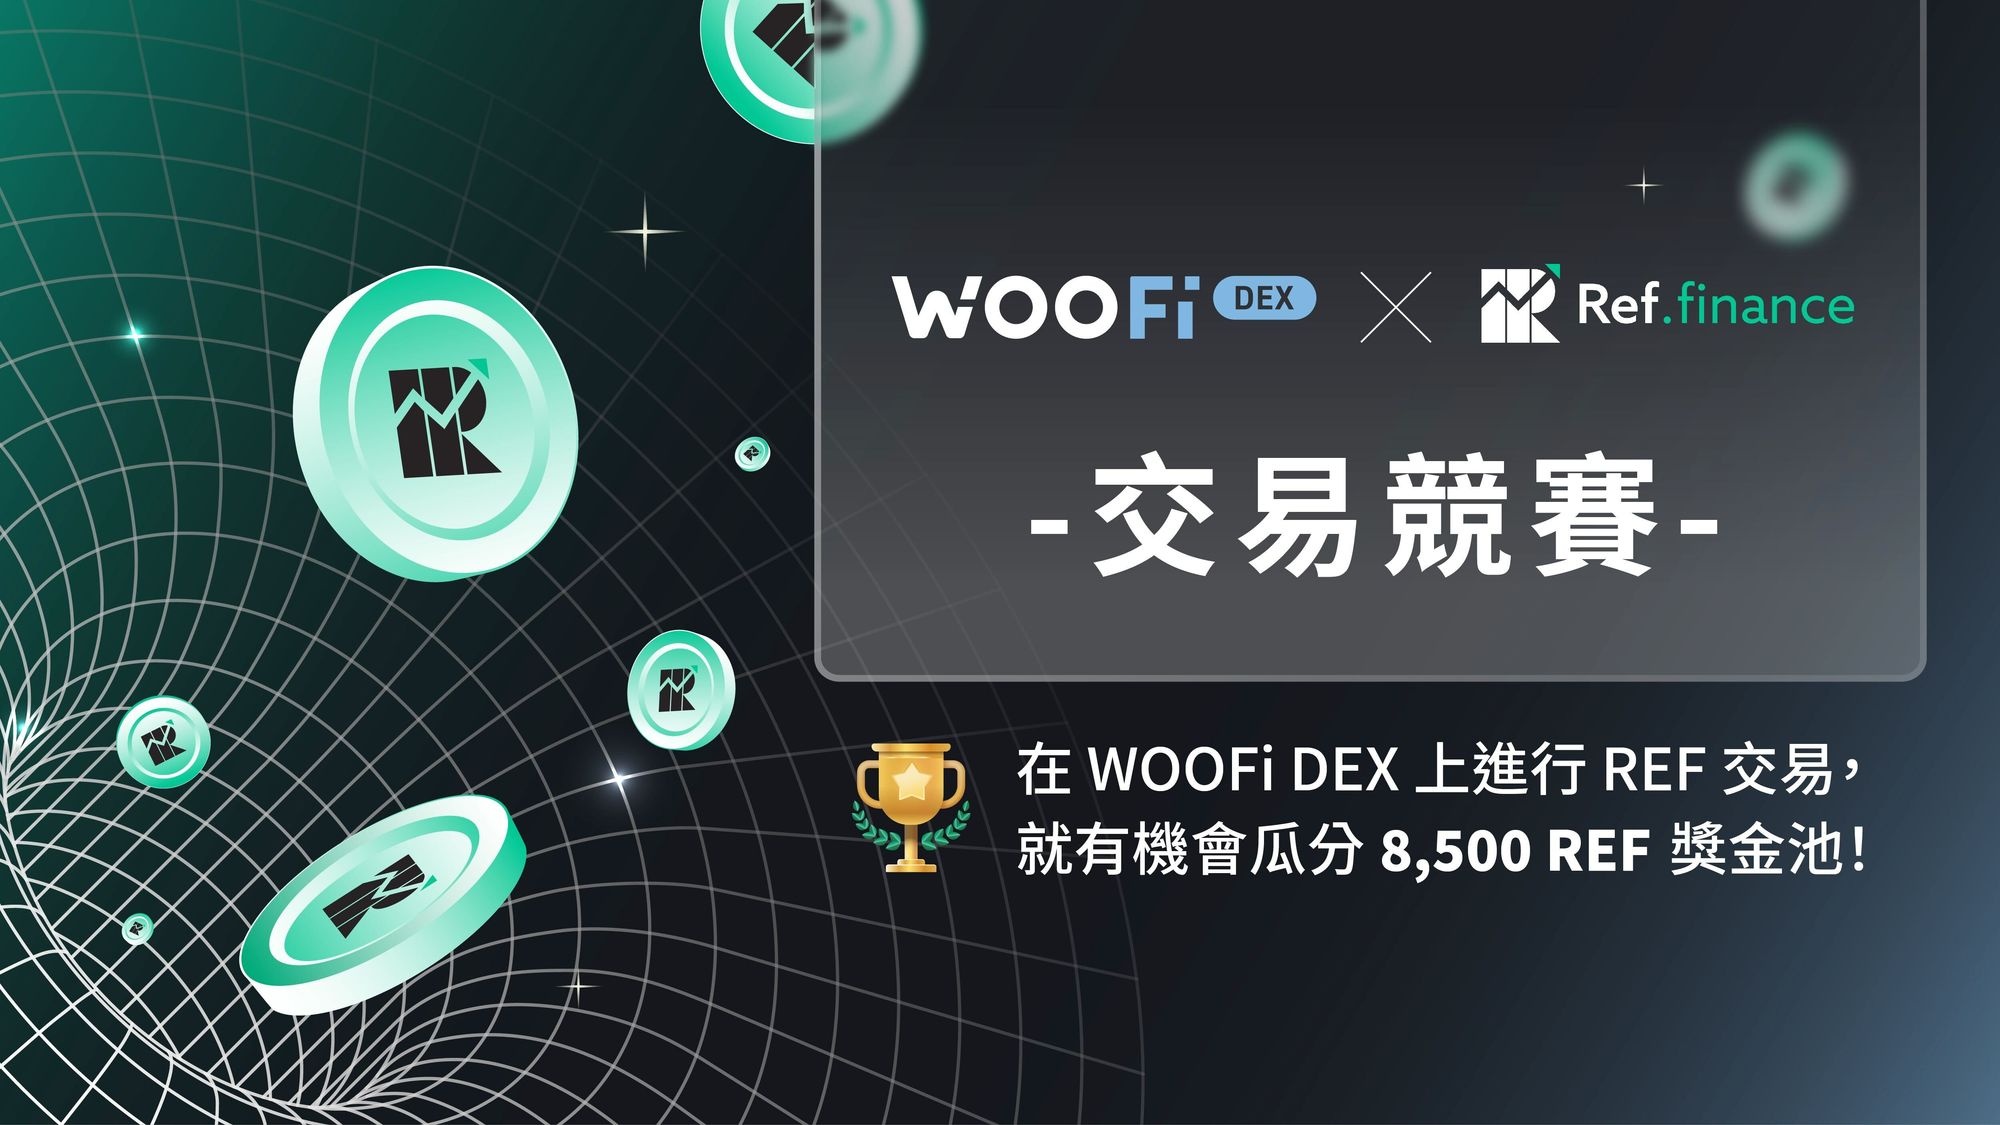 WOOFi DEX 和 Ref Finance 共同舉辦交易競賽，一同瓜分 8,500 REF 獎金池！